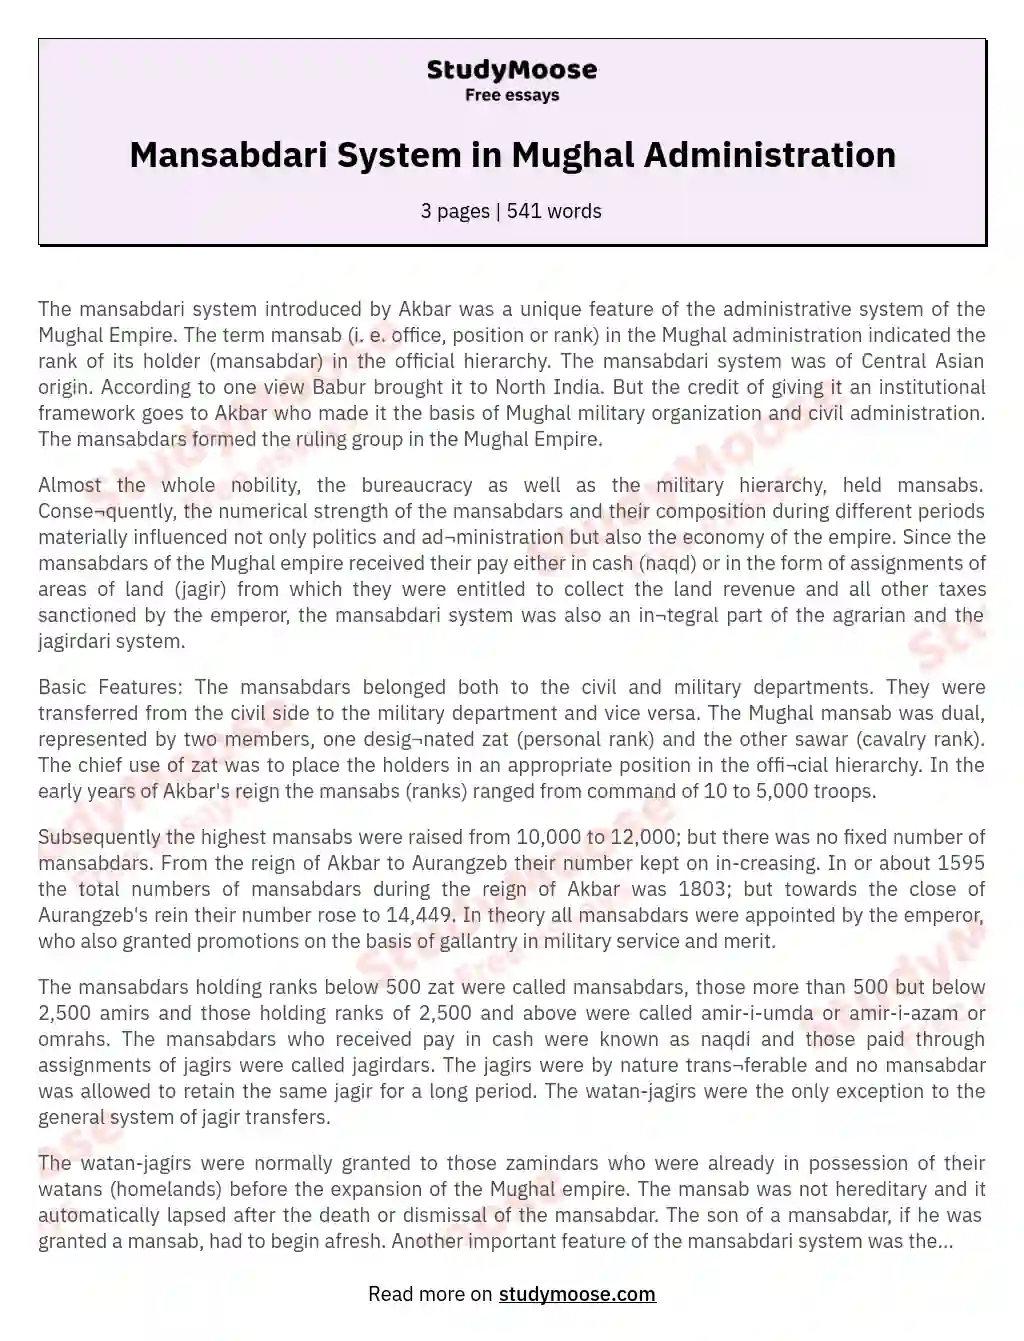 Mansabdari System in Mughal Administration essay